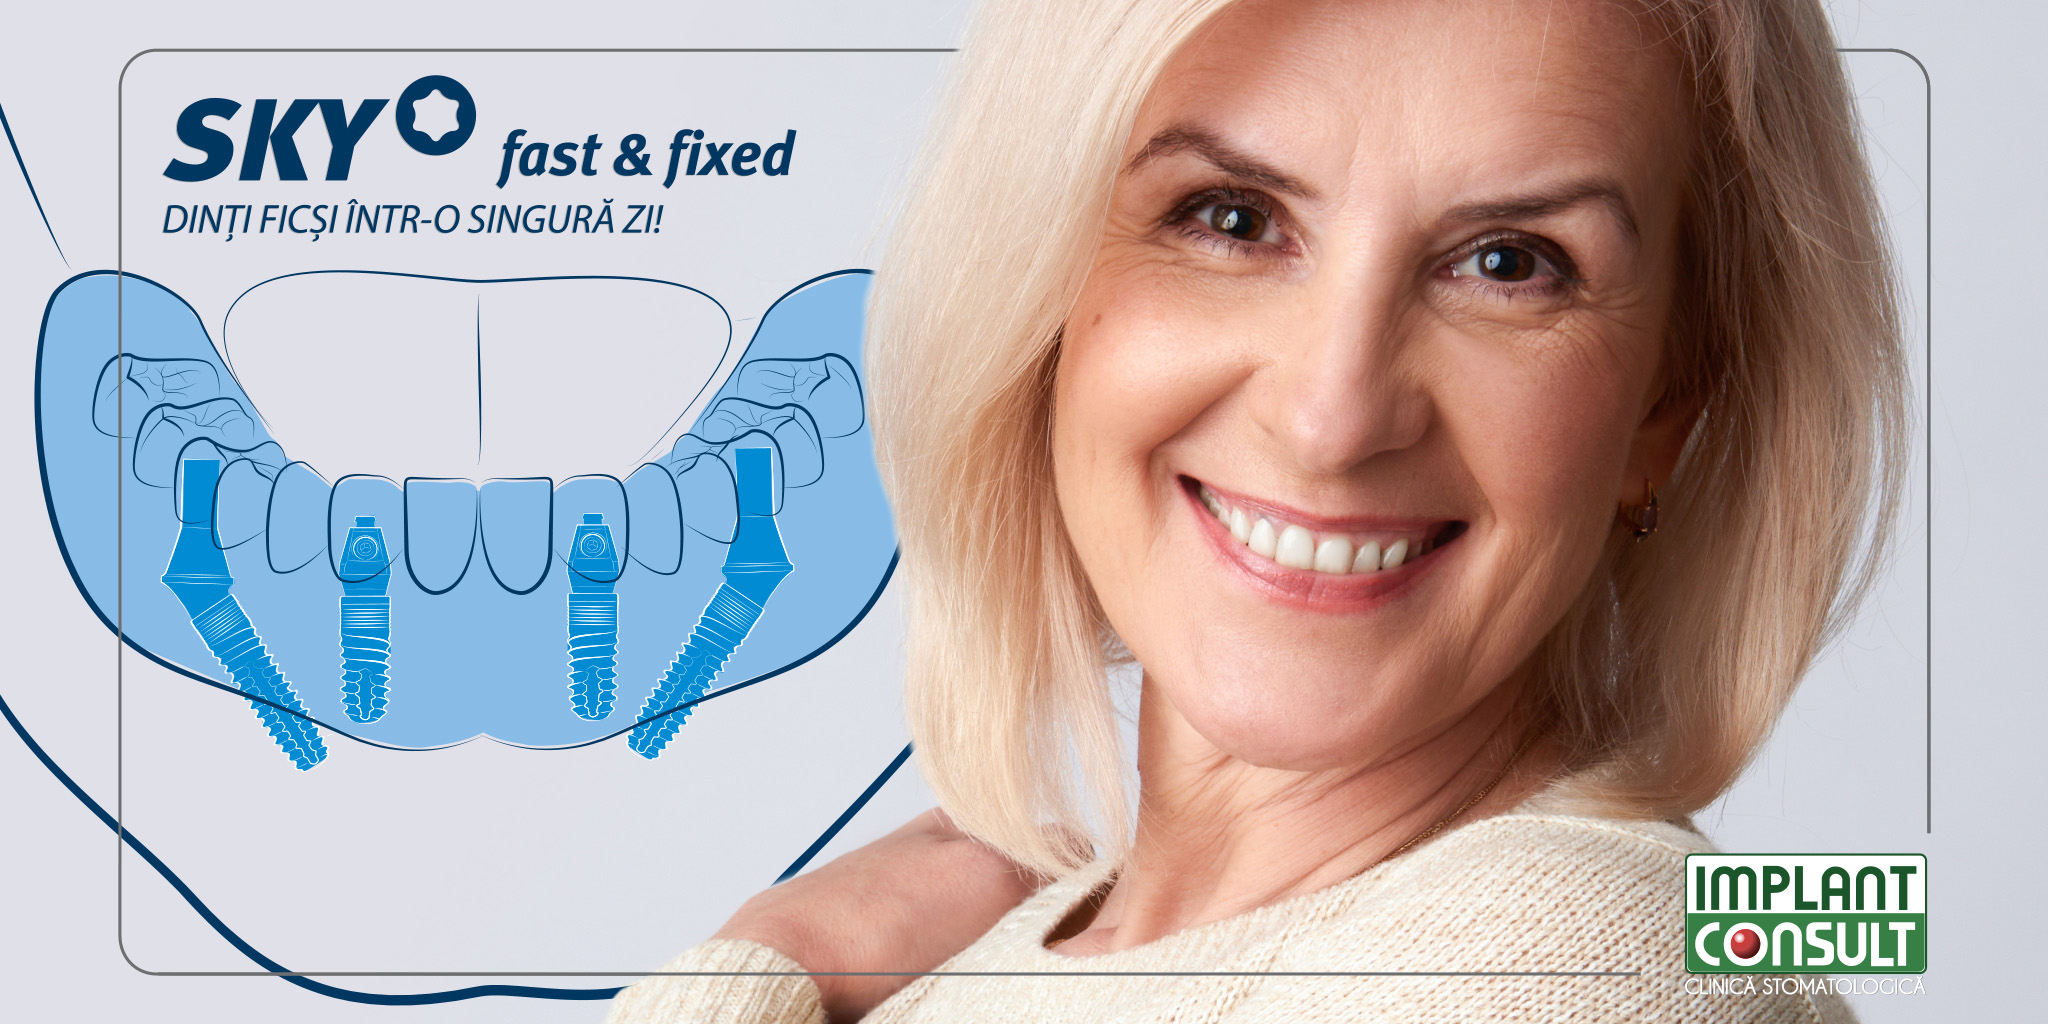 De ce dinti ficsi in locul protezei dentare mobile? SKY fast & fixed - Un nou concept terapeutic. Dinti intr-o zi la Implant Consult